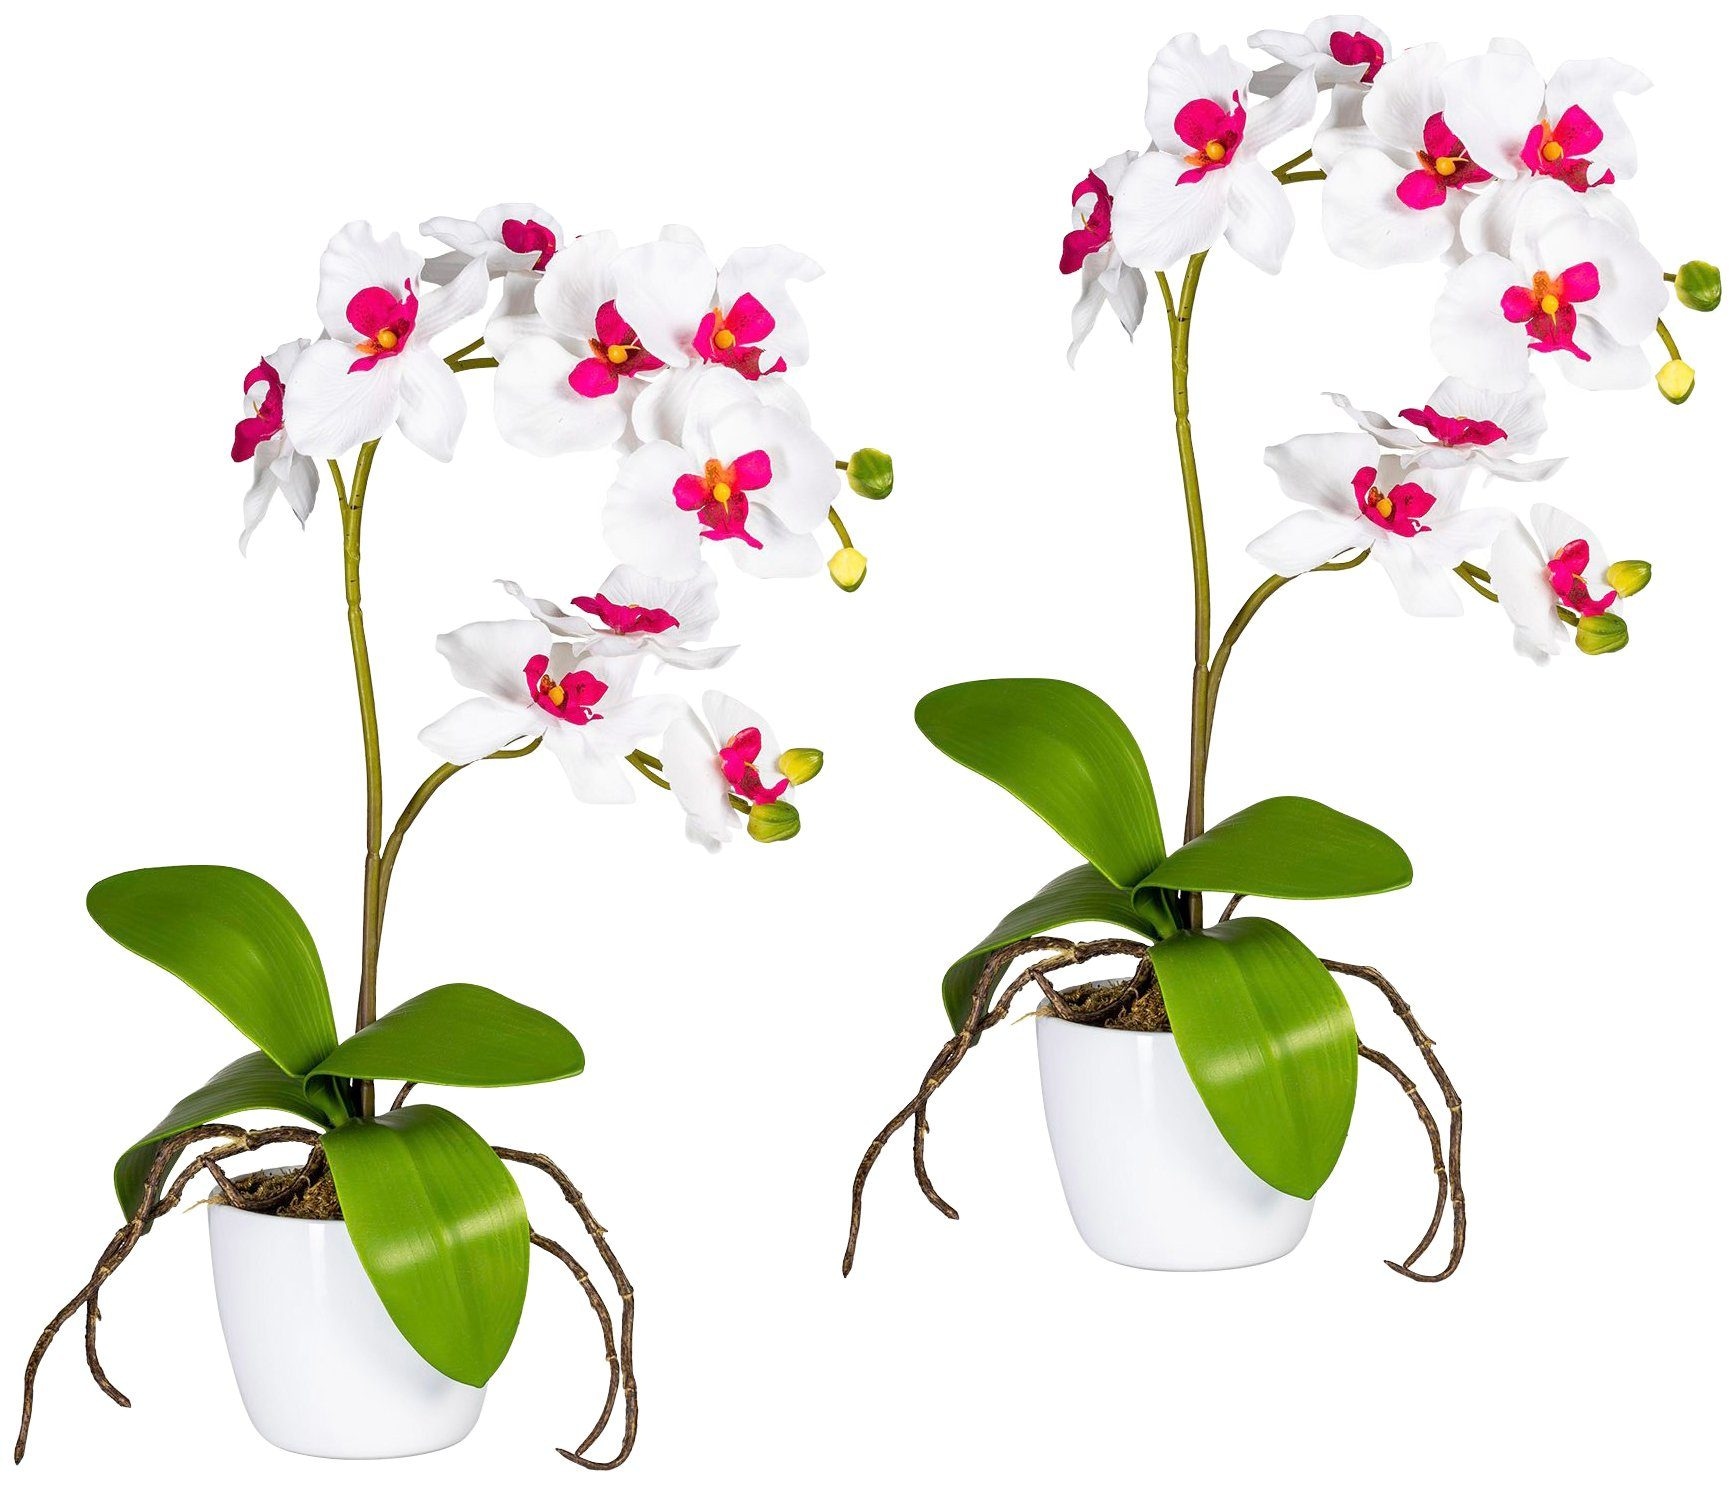 Creativ green Kunstpflanze »Orchidee Phalaenopsis« i...